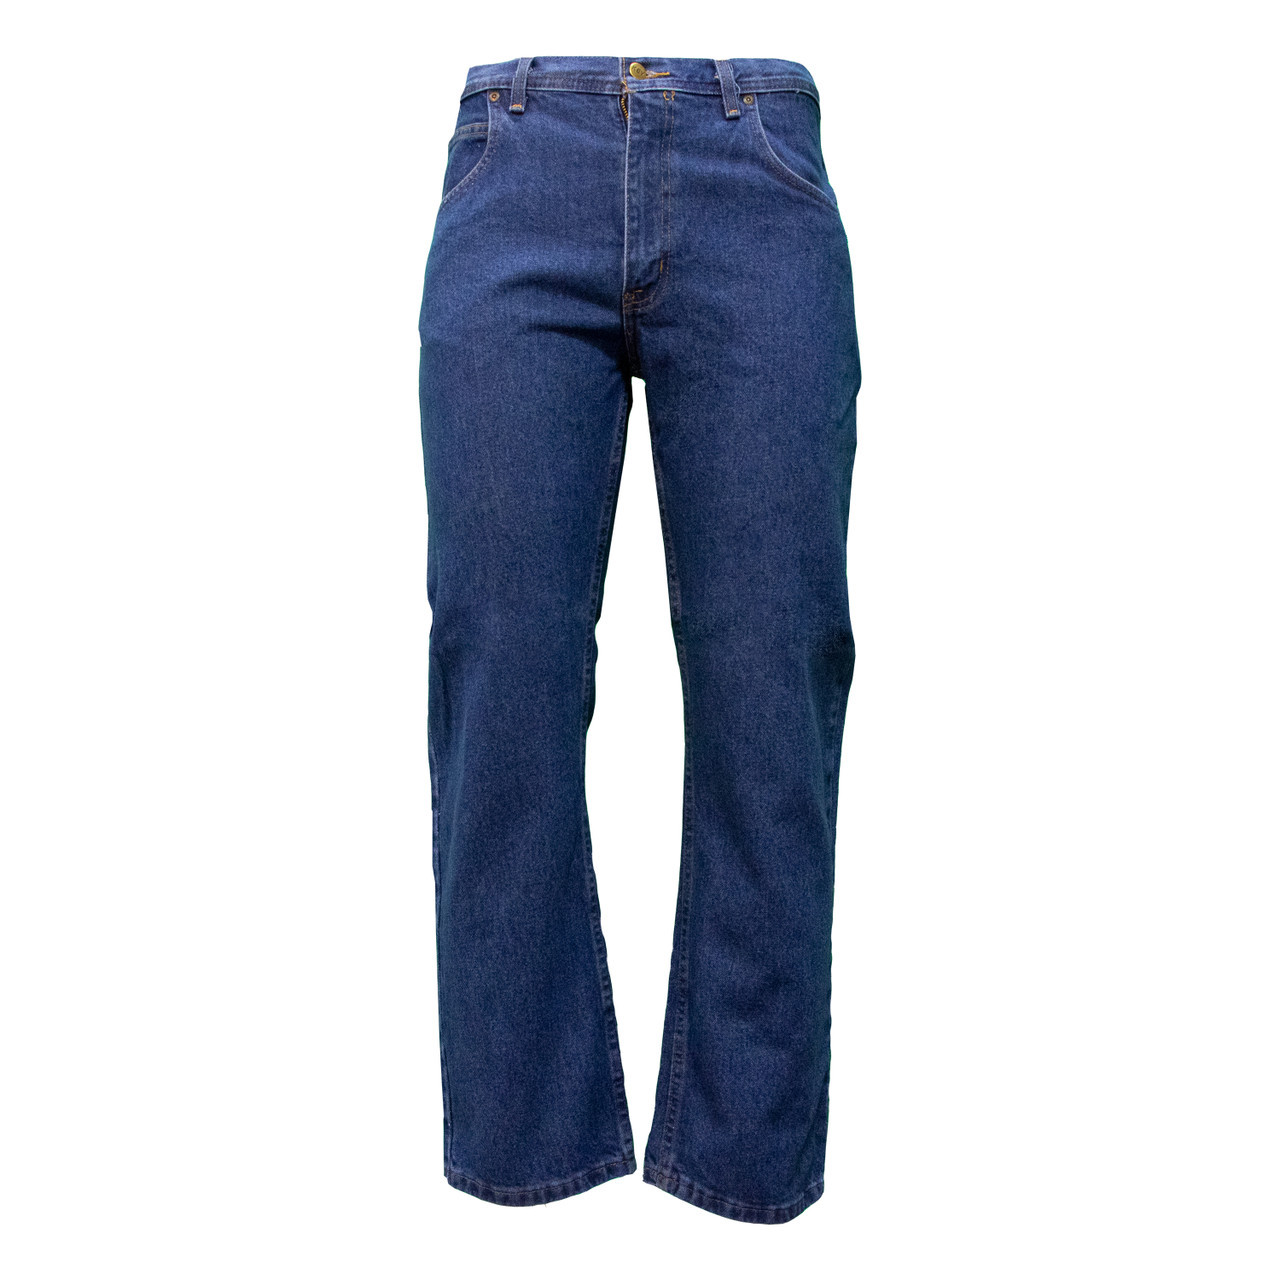 Buy Jade Black Jeans for Men by KOTTY Online | Ajio.com